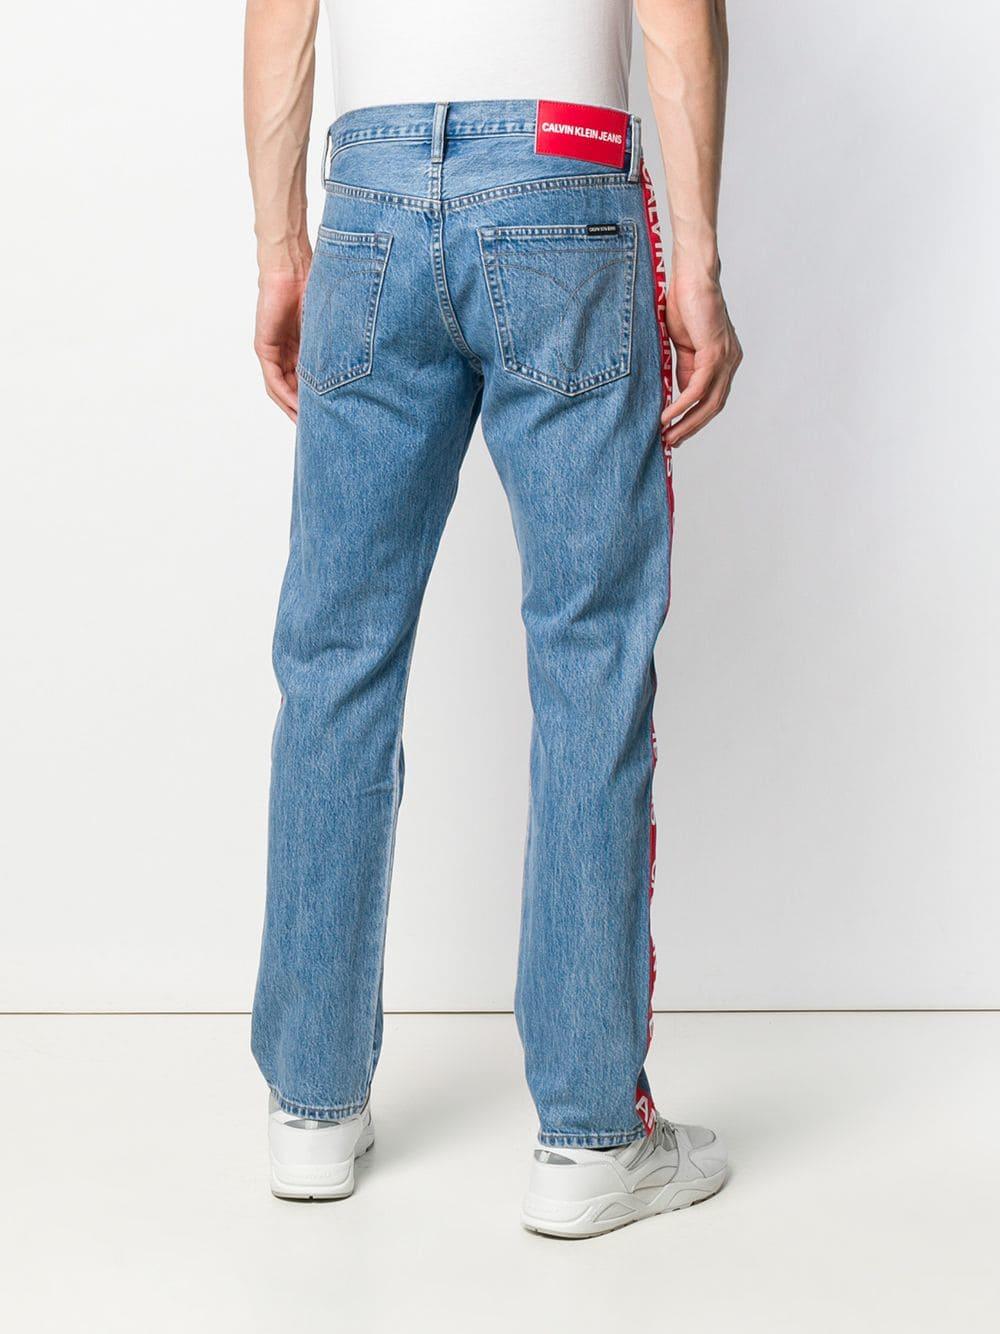 calvin klein jeans with red stripe, Off 69%, www.yesilkoyvet.com